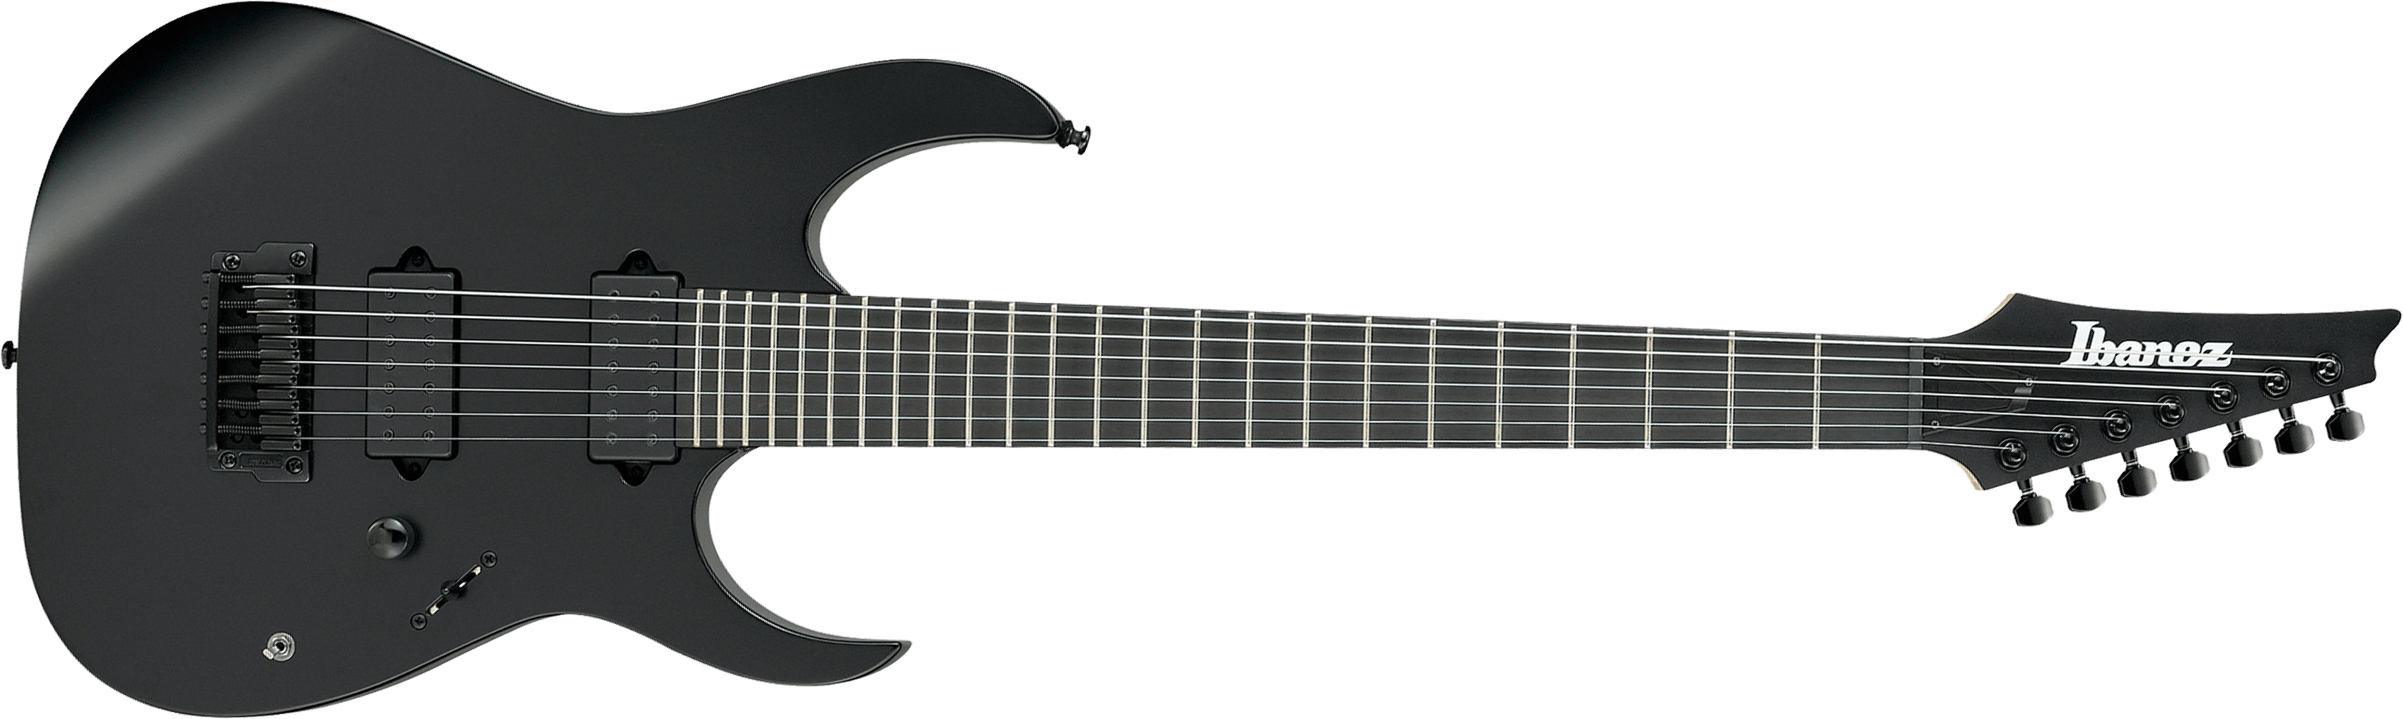 Ibanez Rgixl7 Bkf Iron Label Hh Dimarzio Ht Eb - Black Flat - 7 string electric guitar - Main picture